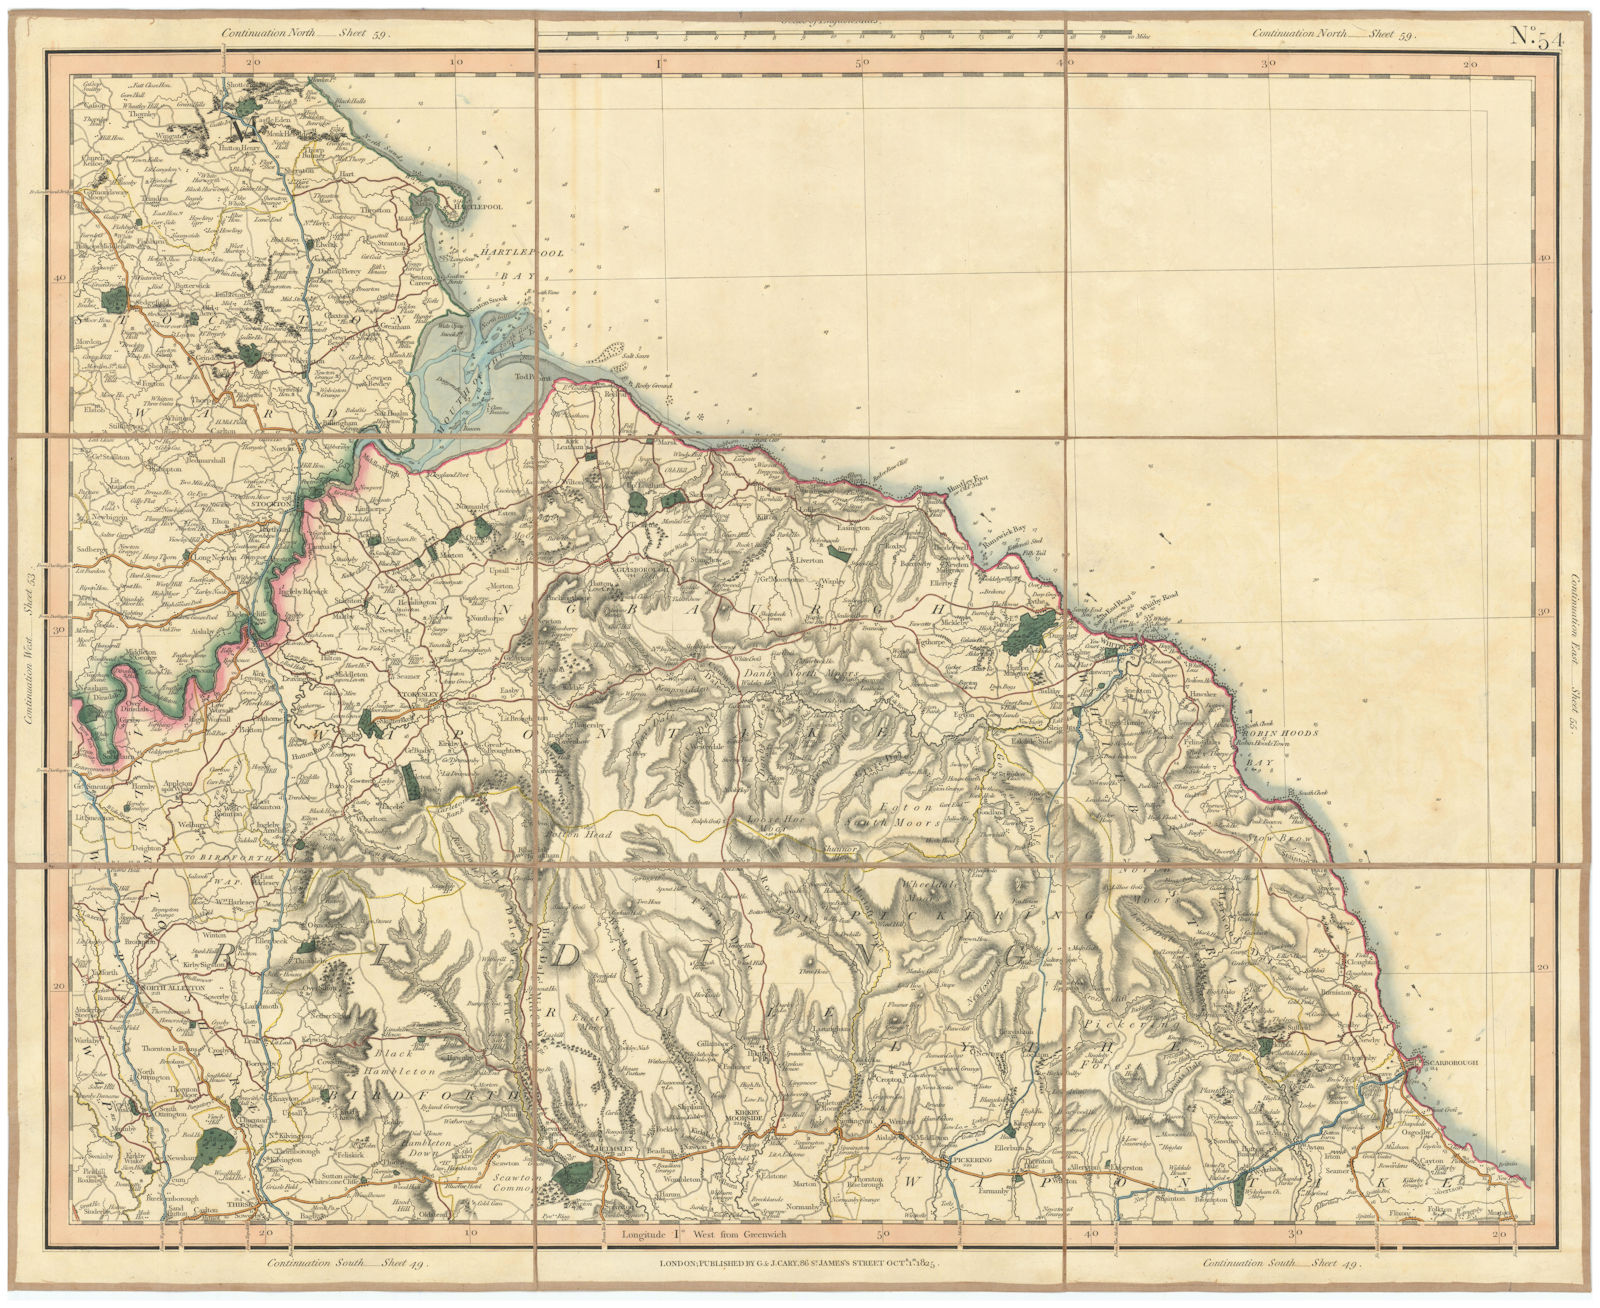 TEESIDE & NORTH YORK MOORS. SE County Durham, North Yorkshire. CARY 1832 map